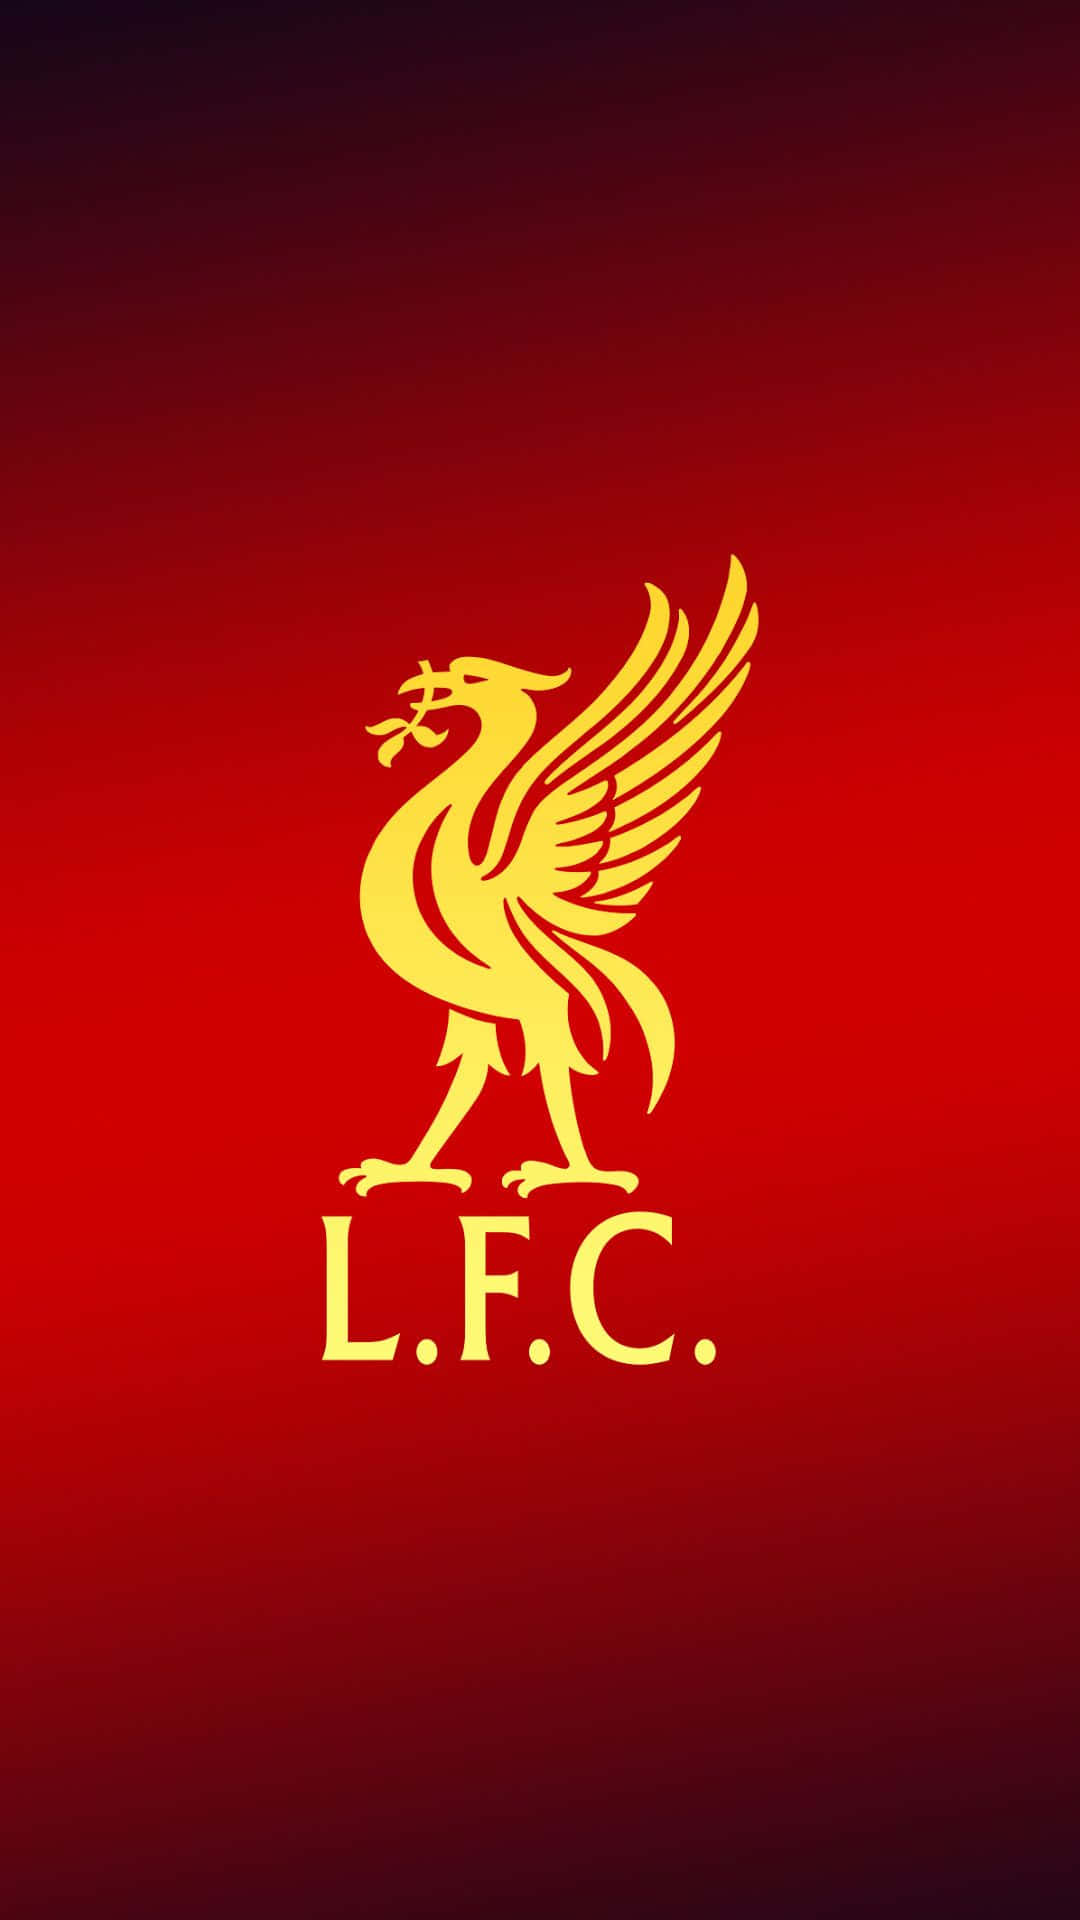 Official Liver Bird Design of the Liverpool Football Club Wallpaper